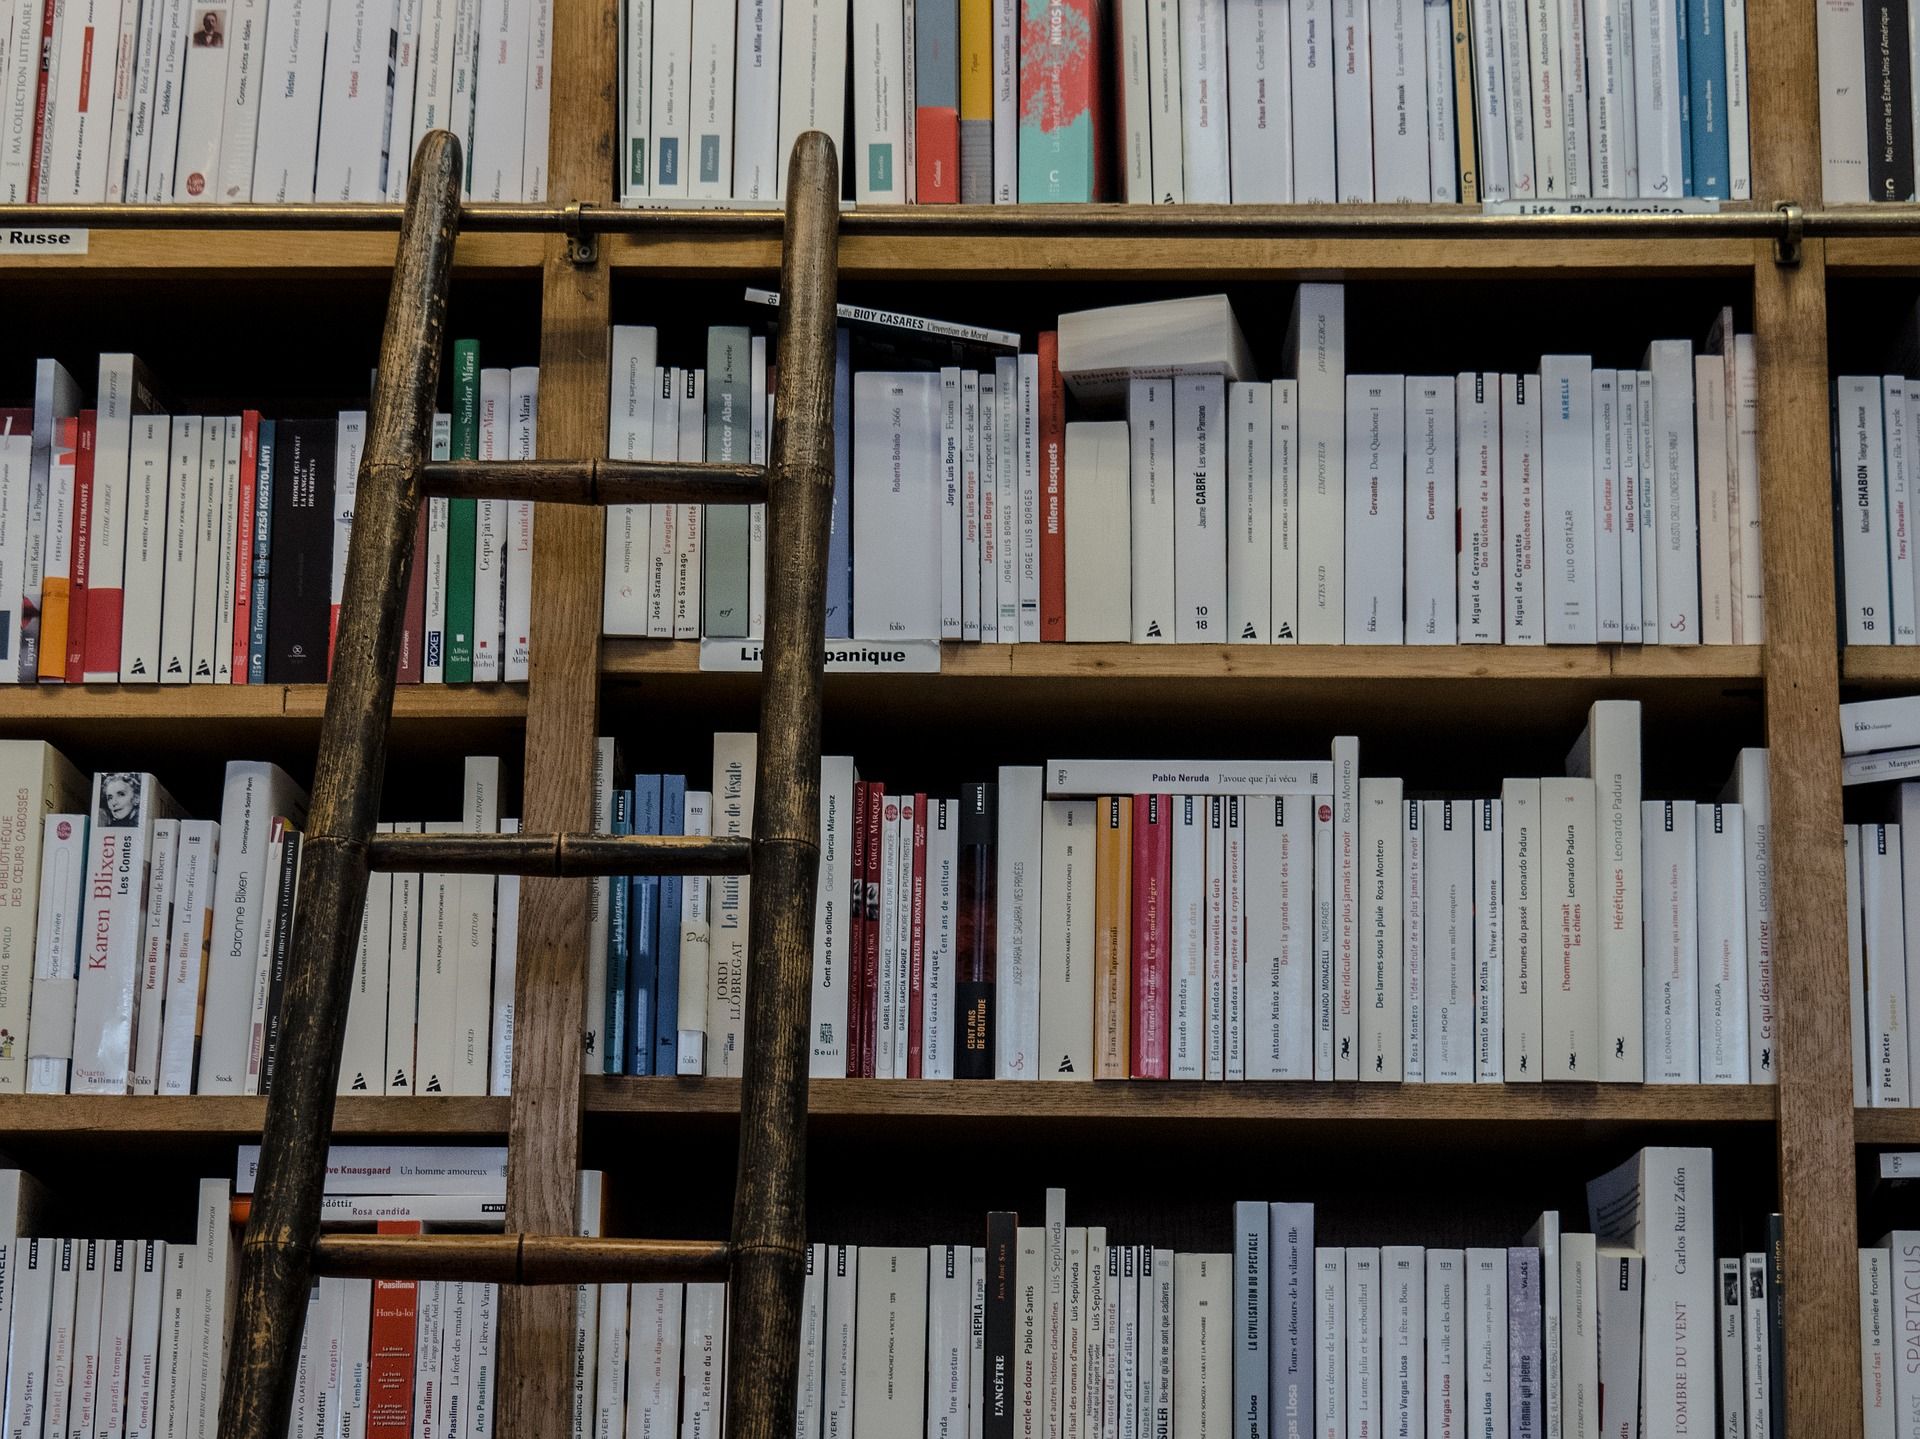 Shelves of books; NCLEX practice questions